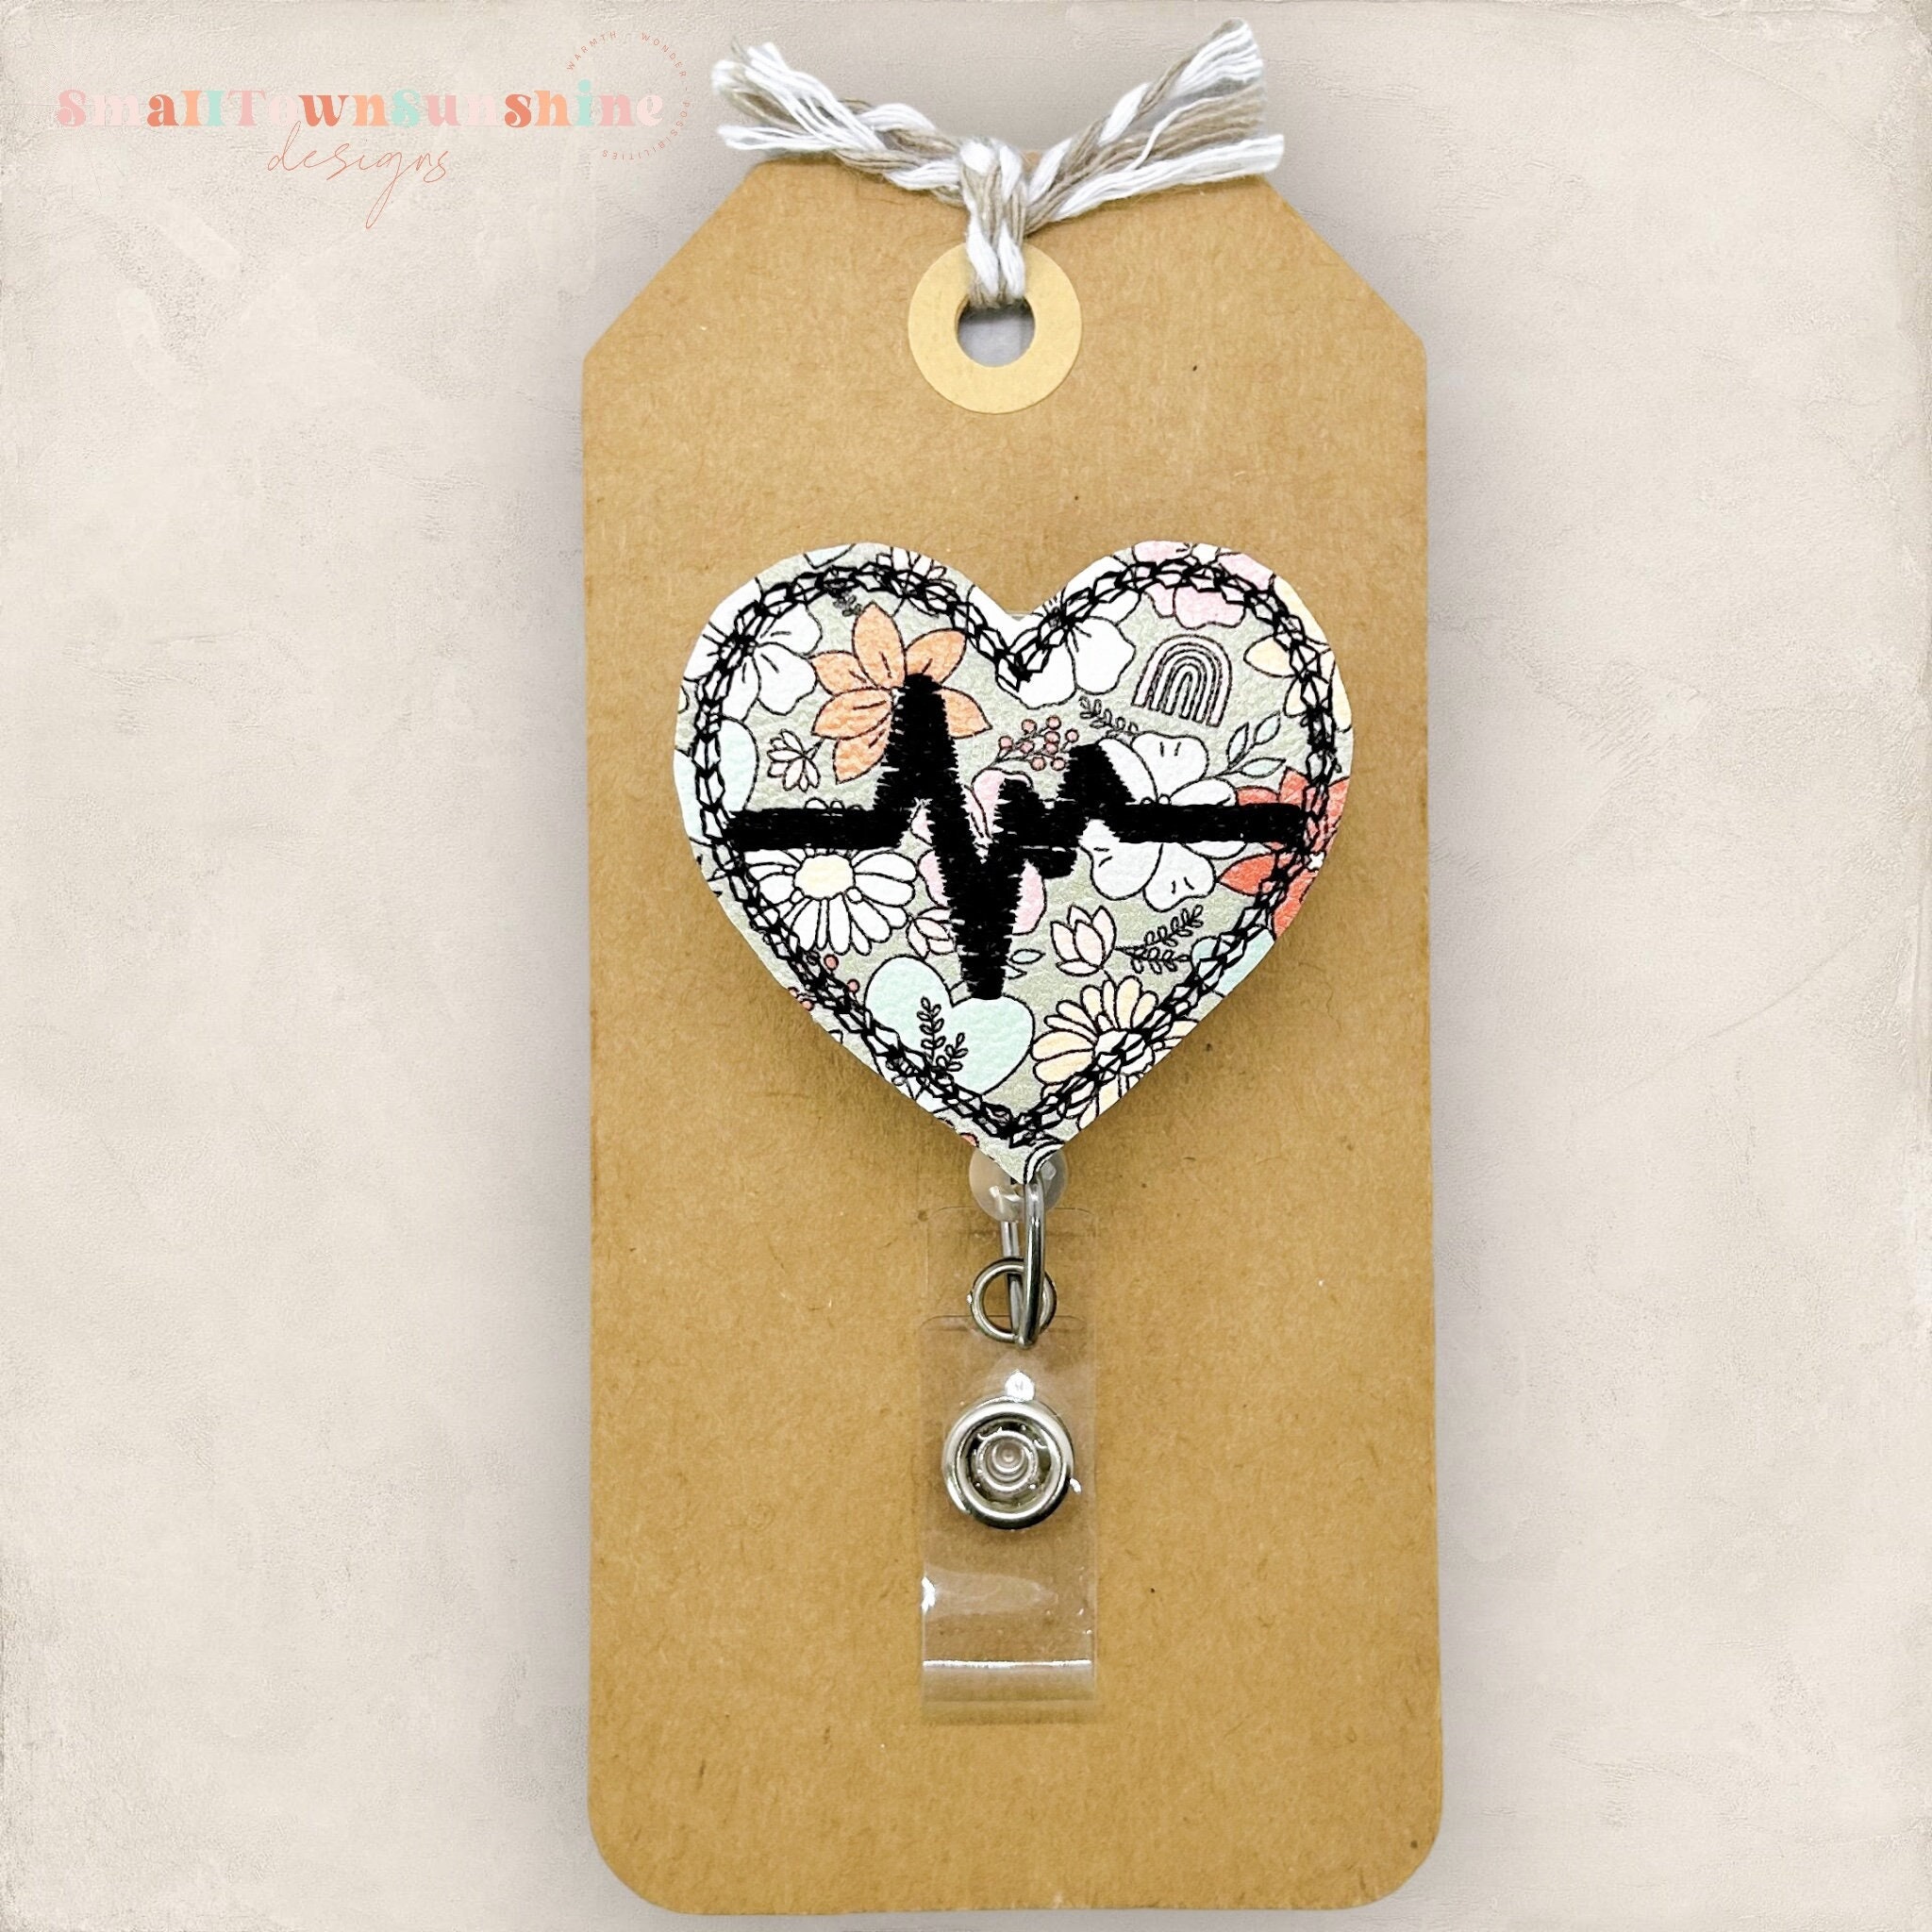 Heart Shaped EKG Themed Badge Reel with Swivel Spring Clip (2120-76XX)